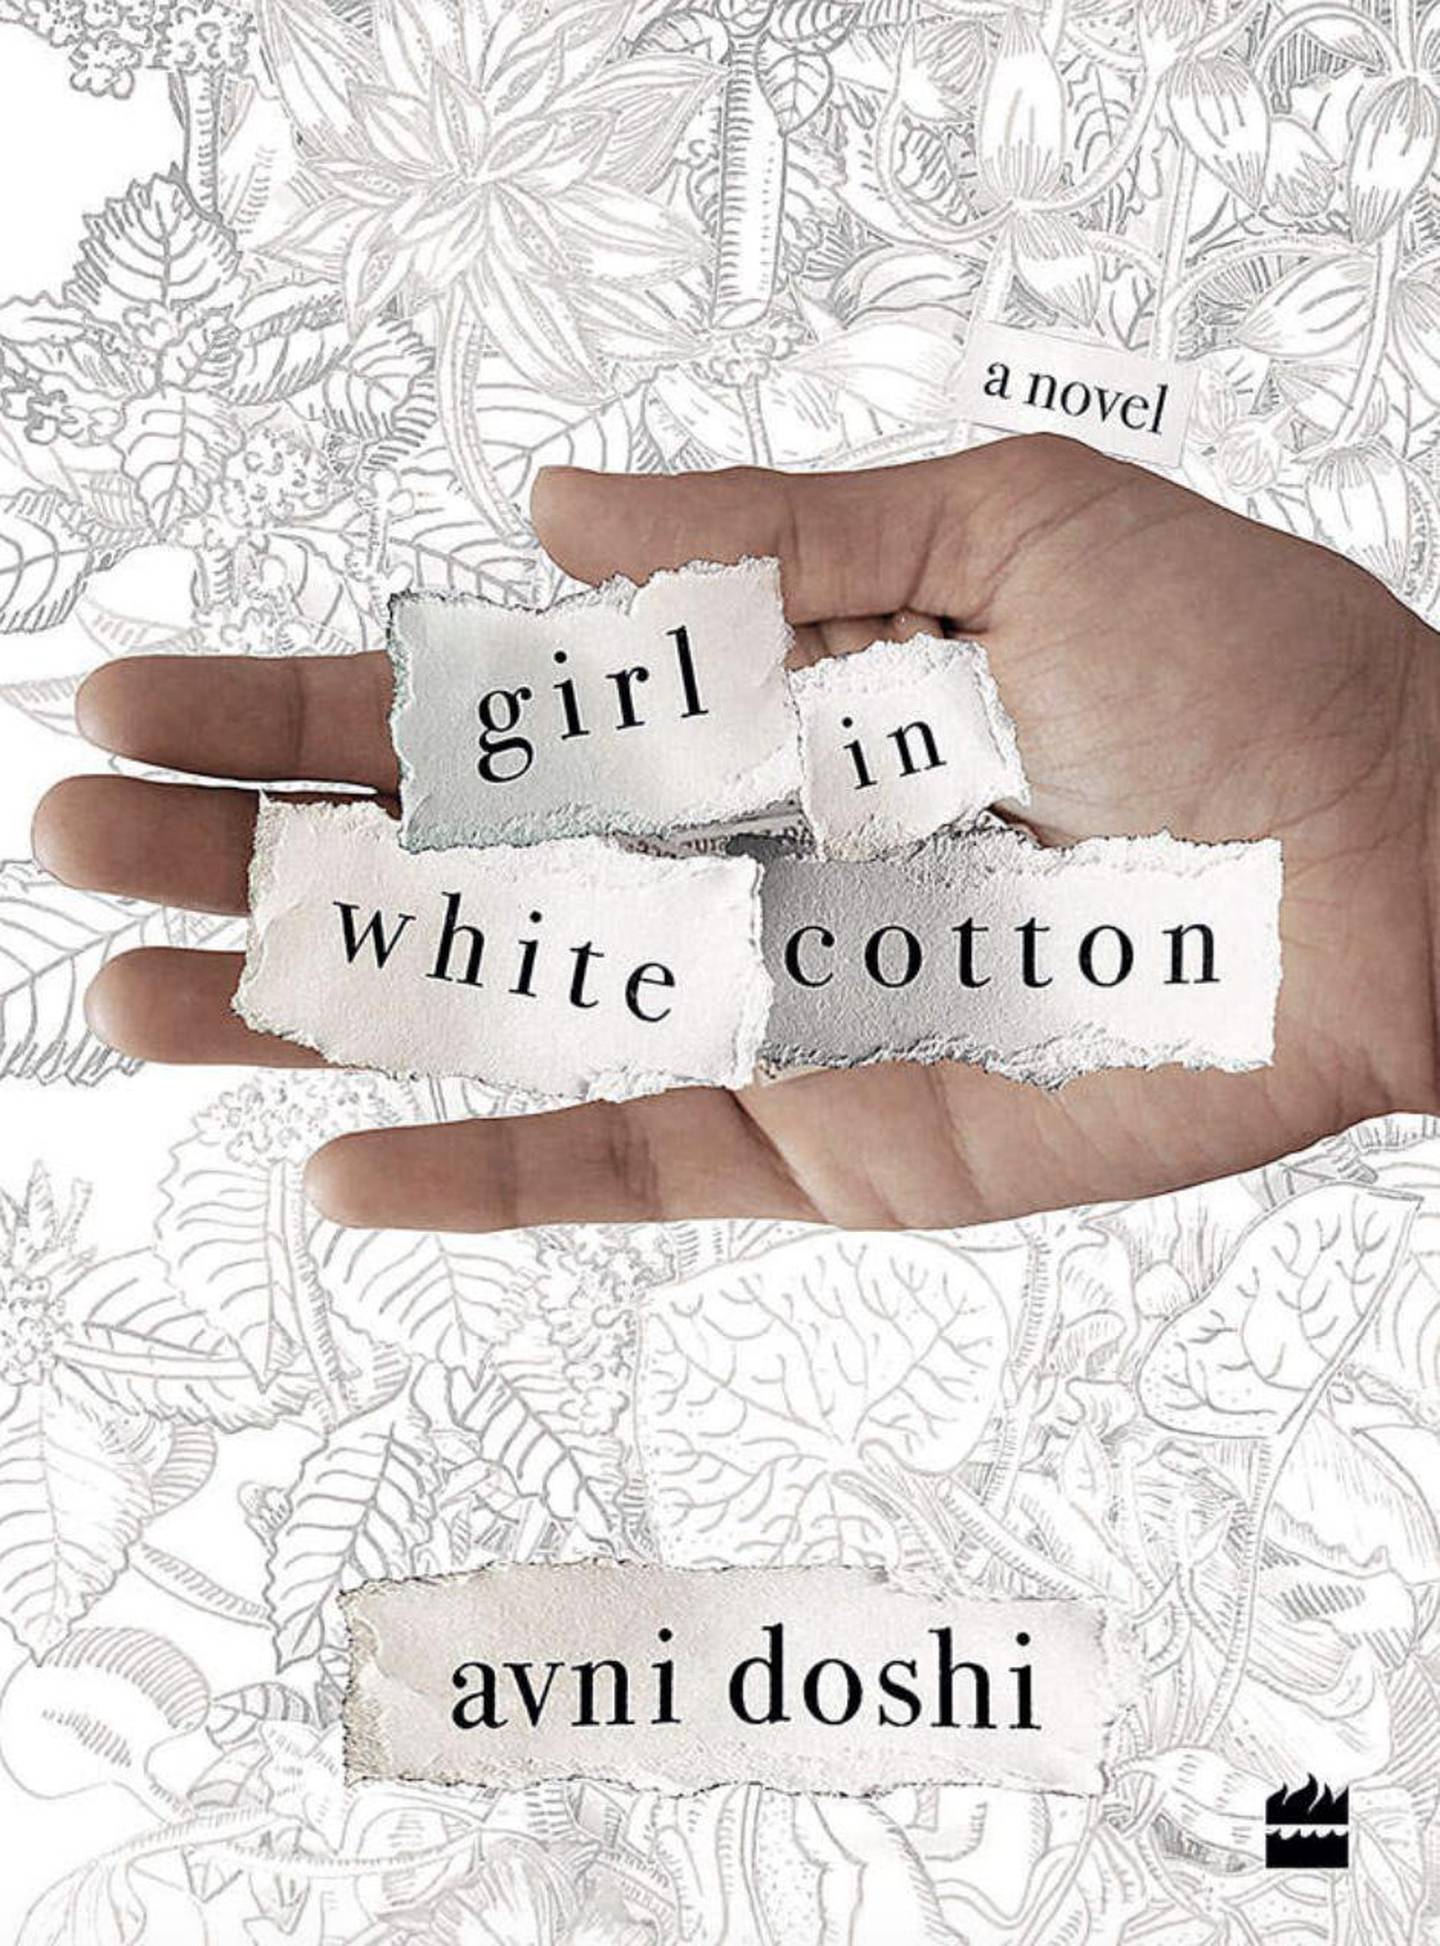 'Girl in White Cotton' by Avni Doshi